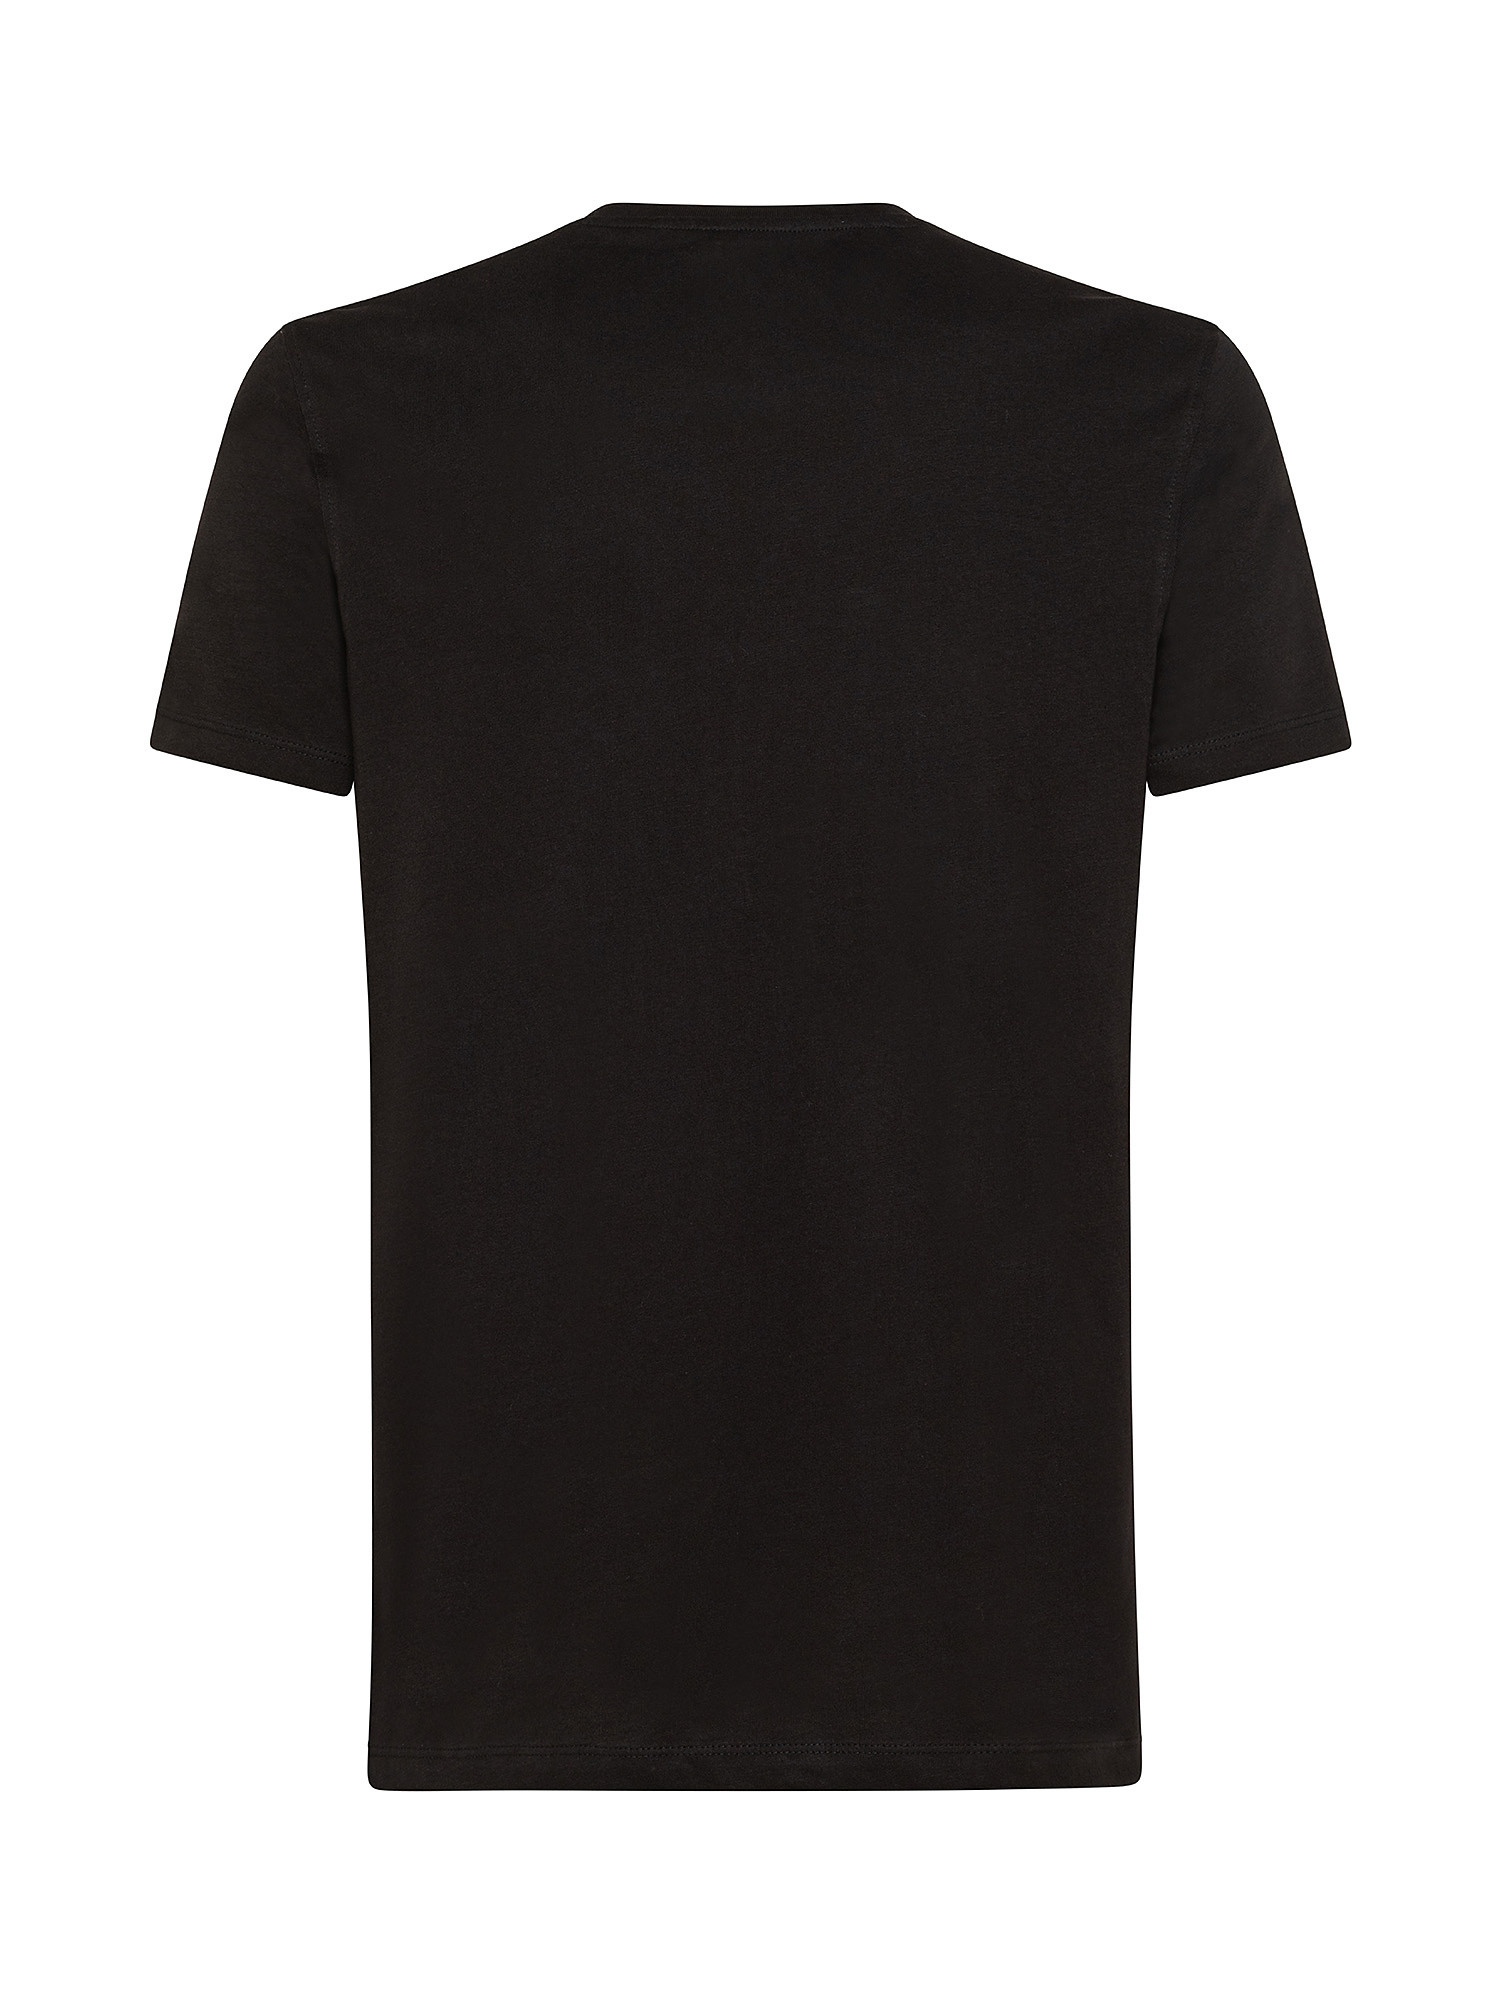 Luca D'Altieri - Crew neck supima cotton T-shirt, Black, large image number 1